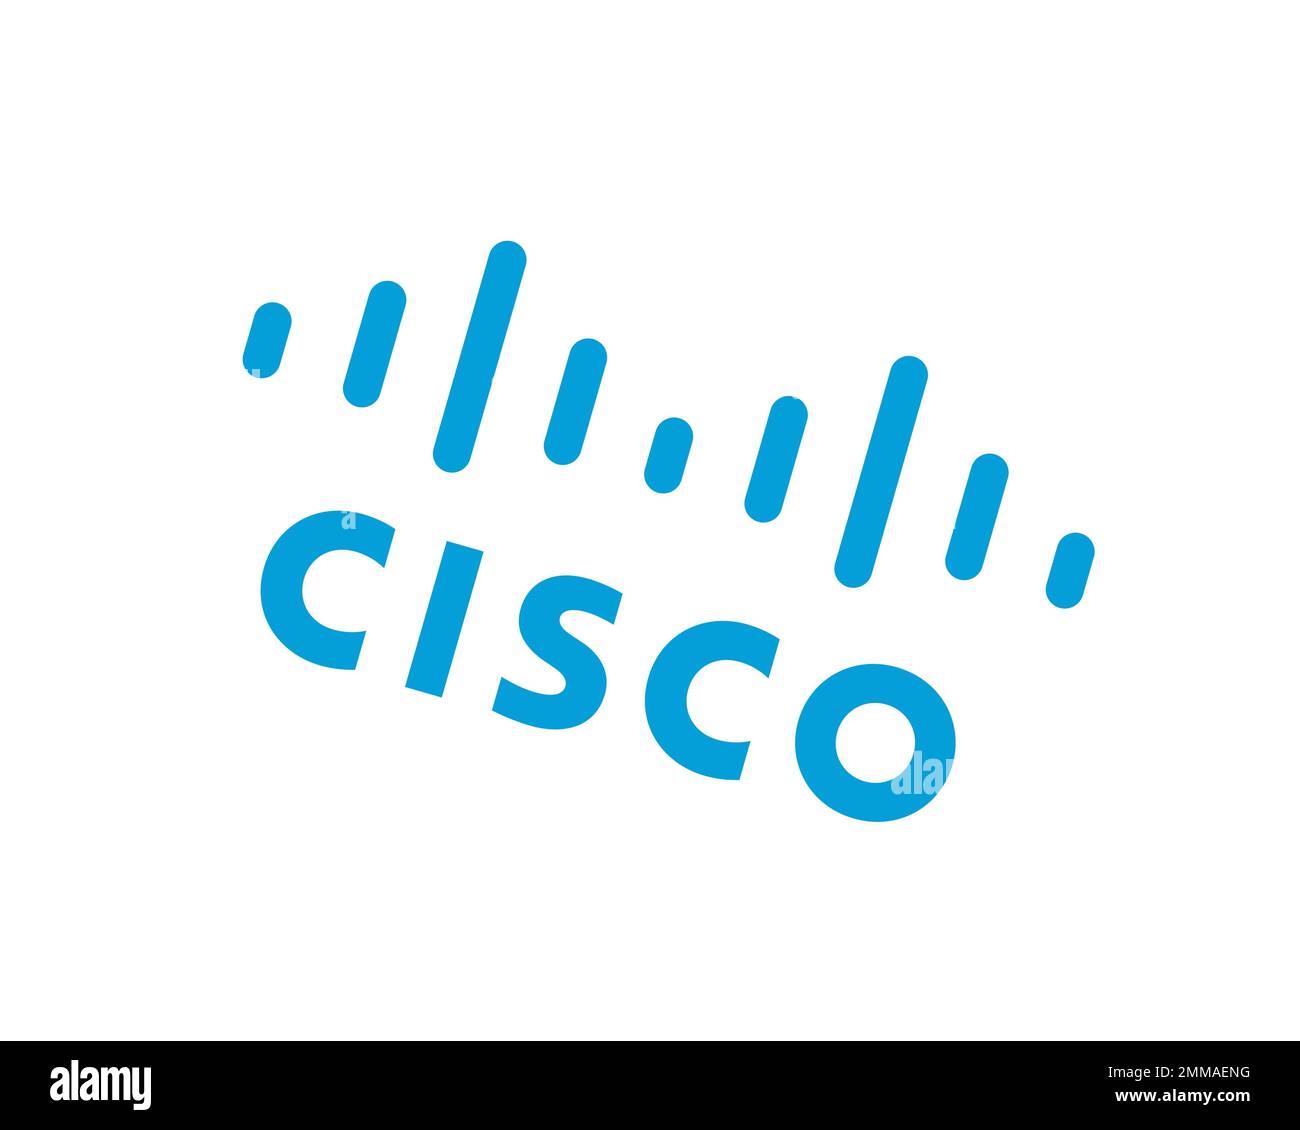 Cisco Systems, rotated, white background, logo, brand name Stock Photo ...